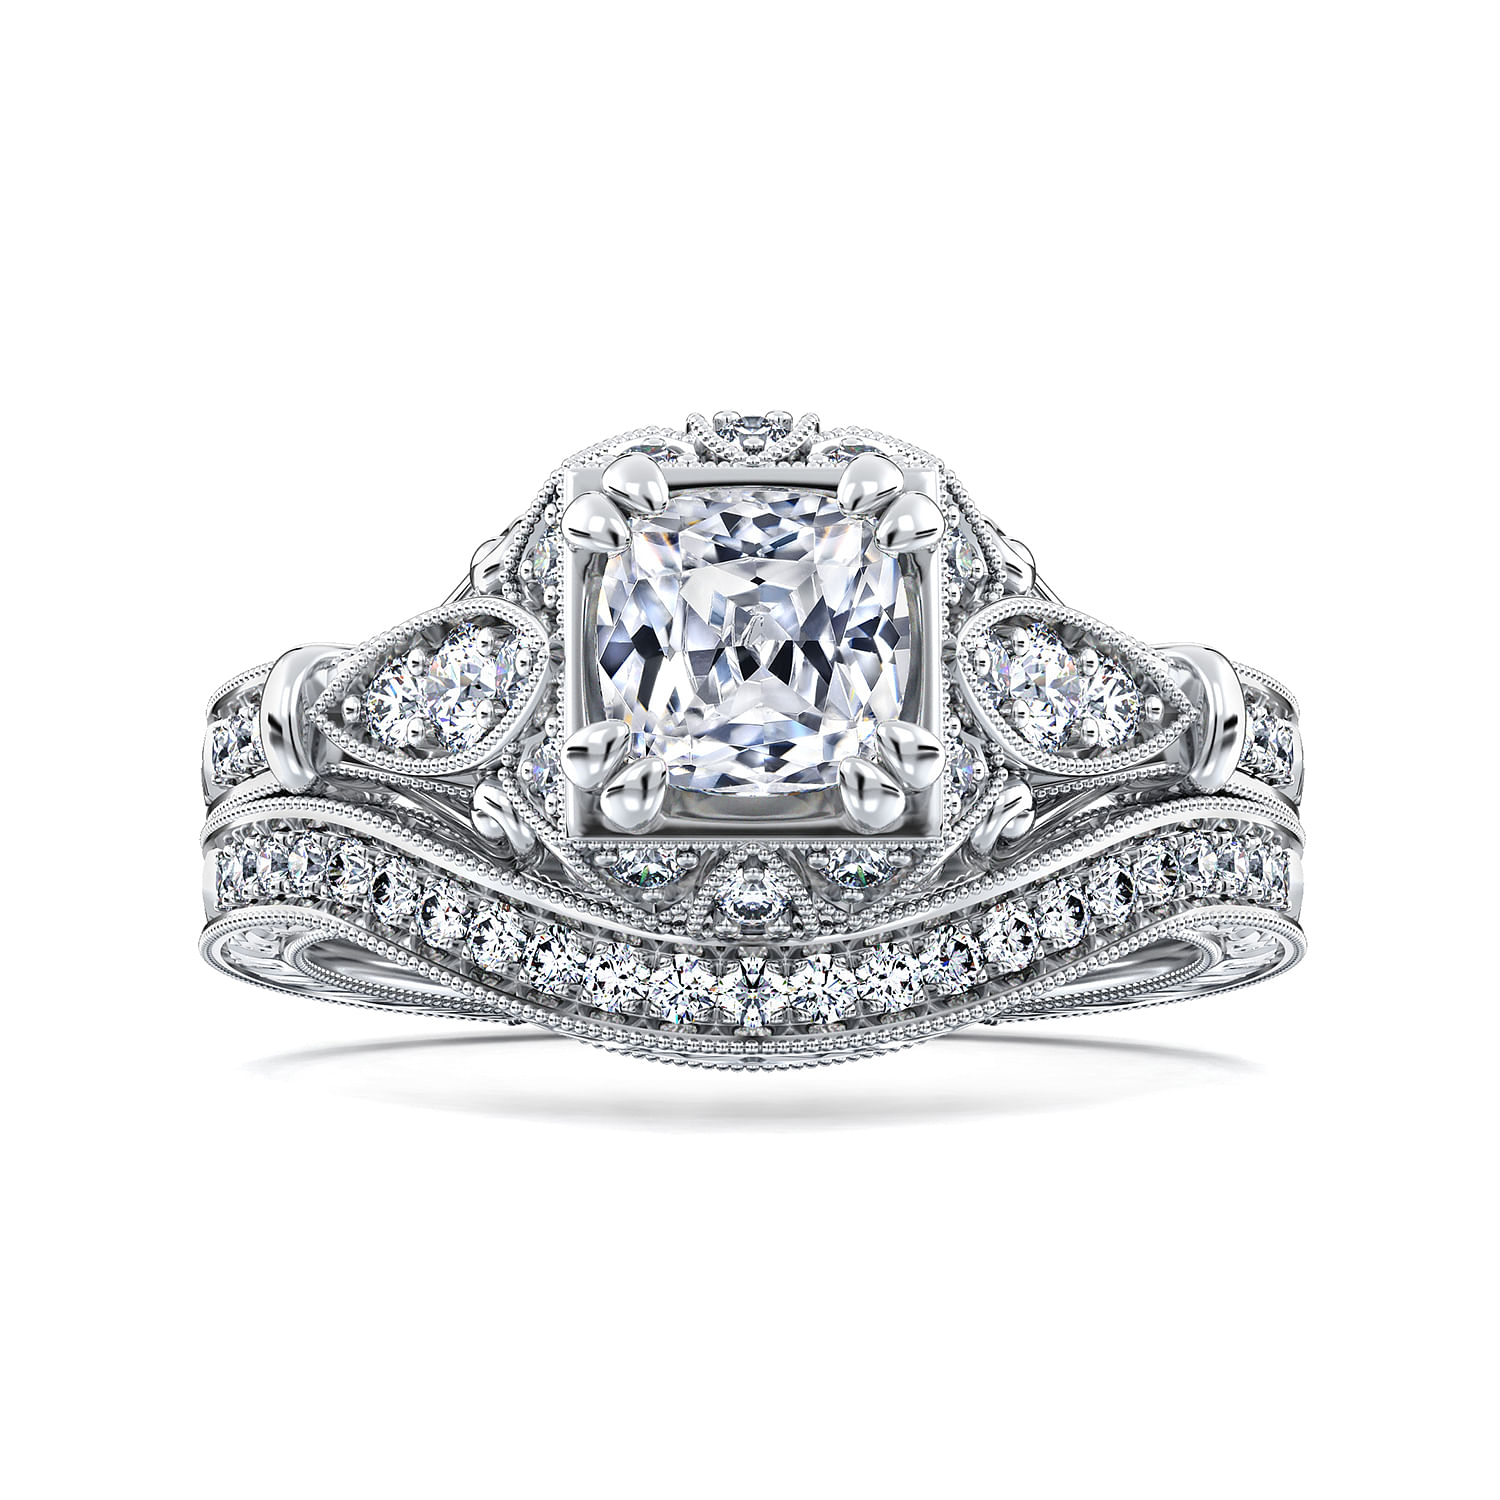 Montgomery - Unique 14K White Gold Vintage Inspired Cushion Cut Halo Diamond Engagement Ring - 0.27 ct - Shot 4